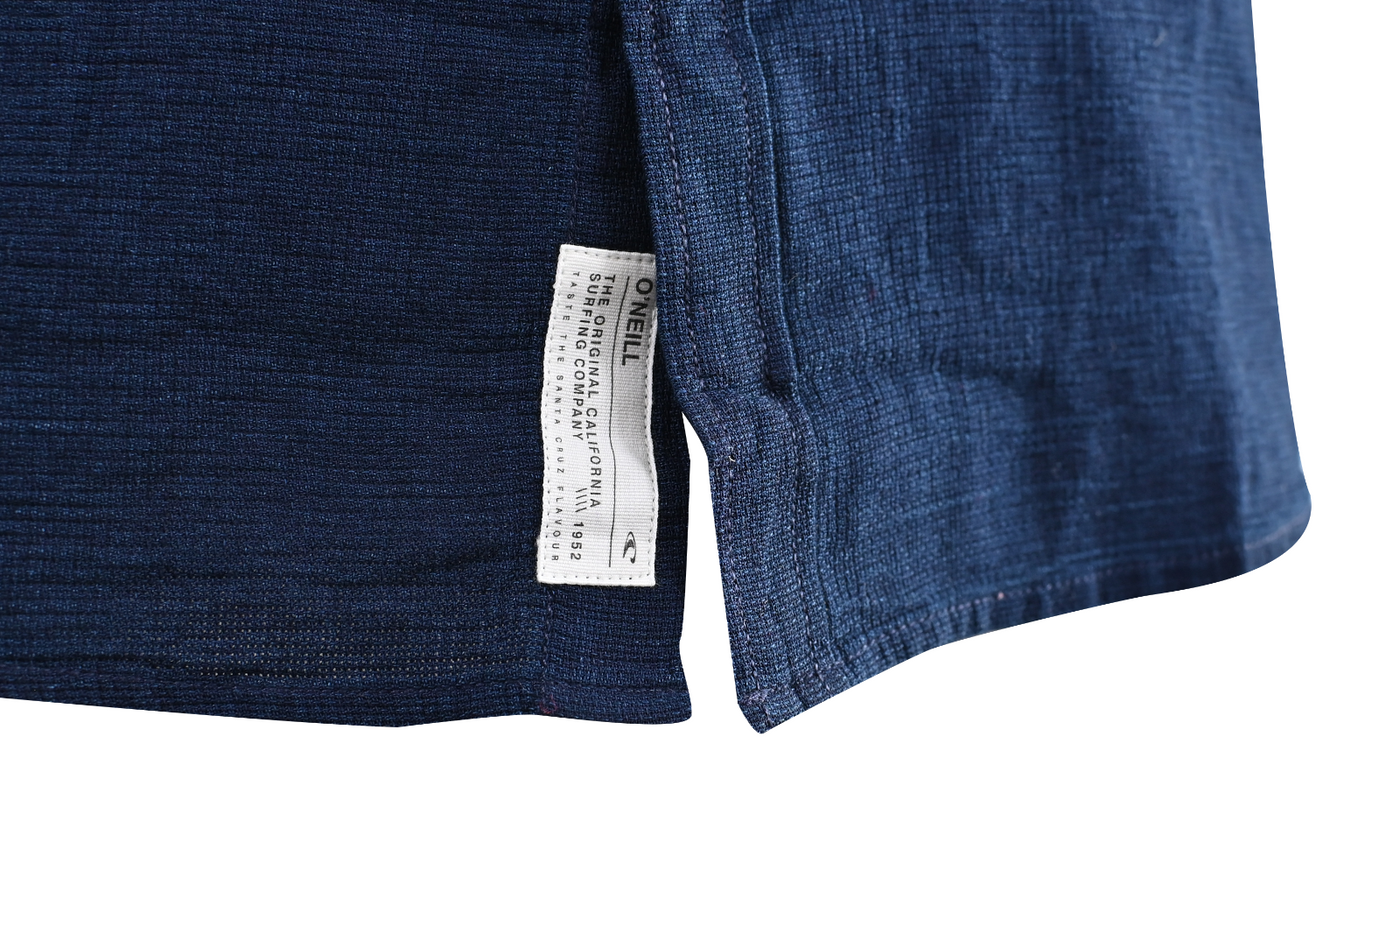 O'Neill Men's Woven Shirt Solid Dark Blue Chambray Pocket Short Sleeve (S08)